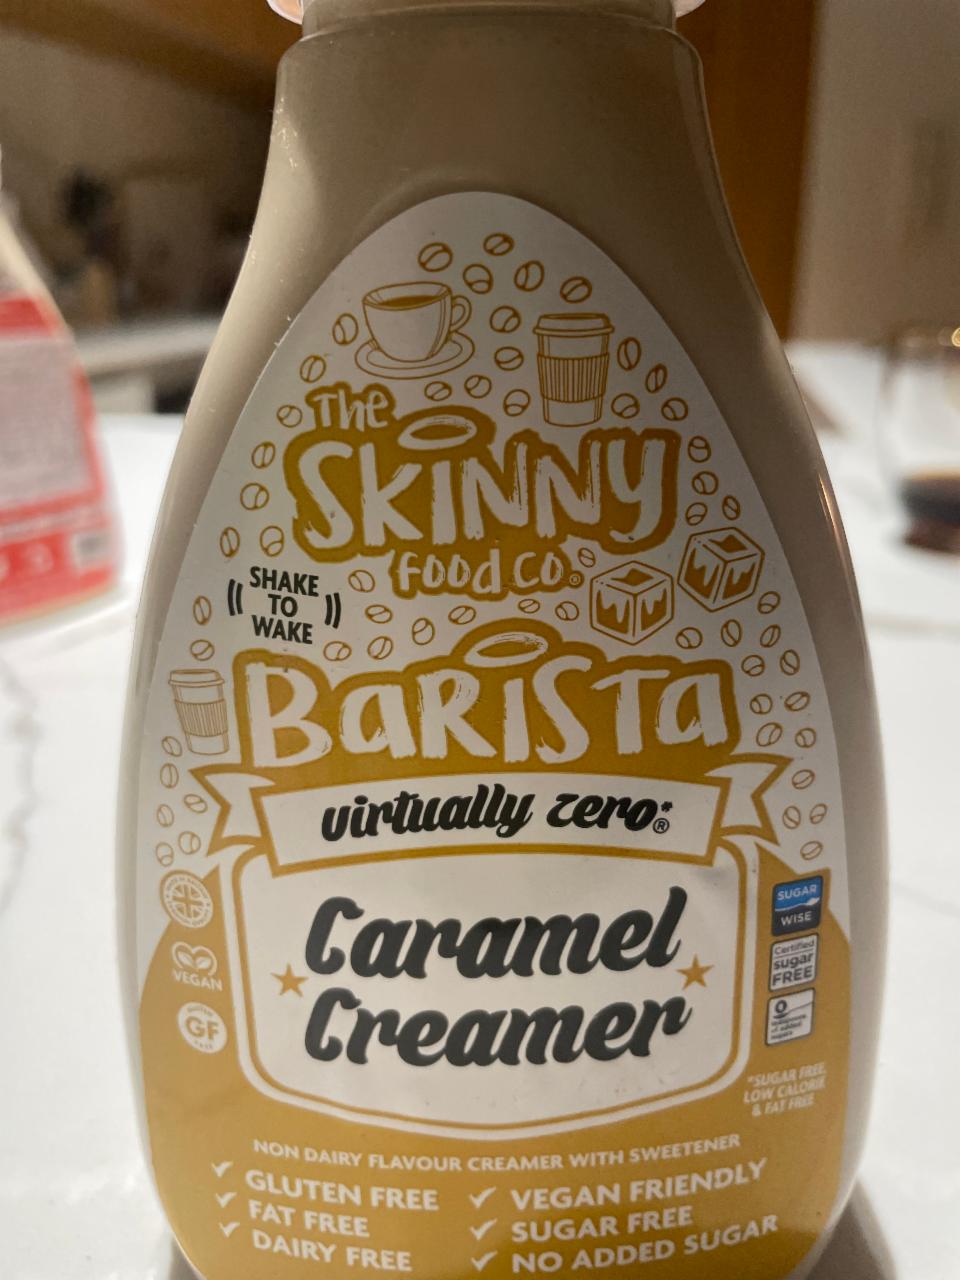 Fotografie - Skinny food co barista caramel creamer